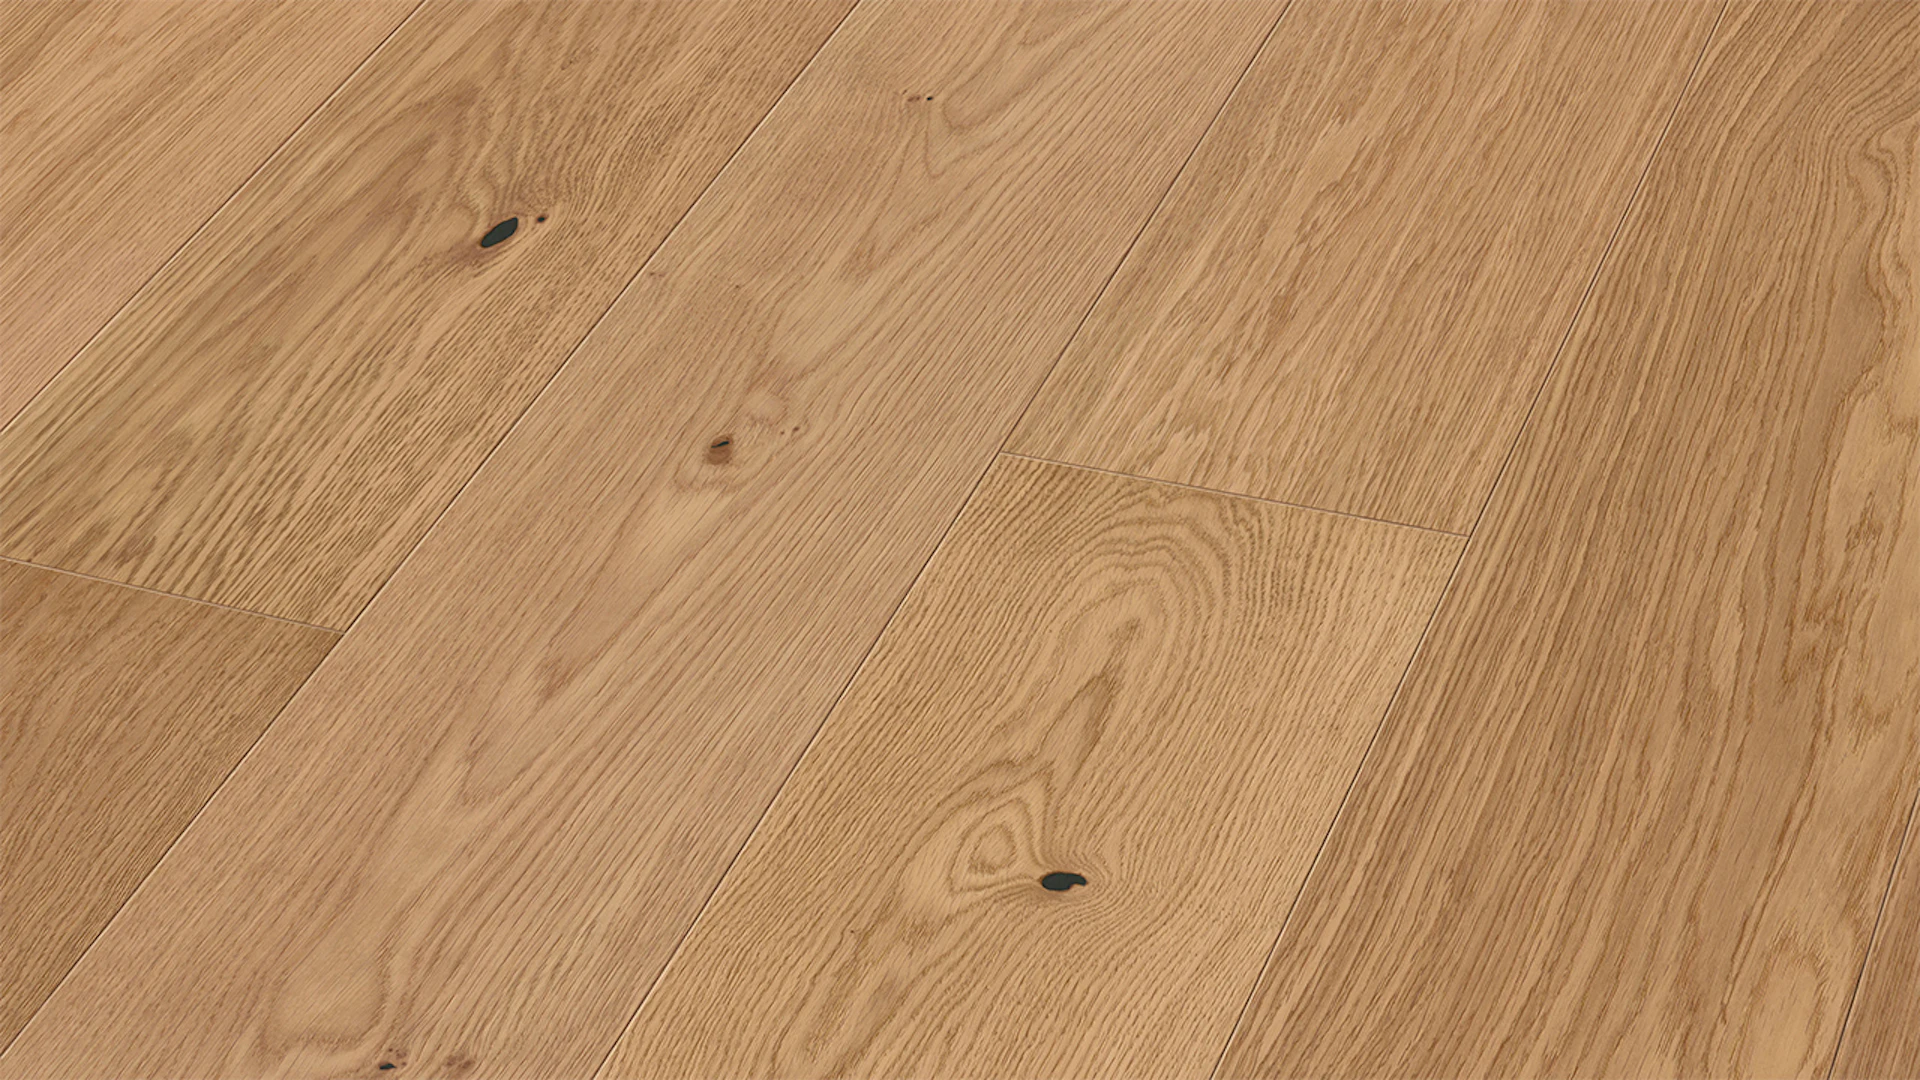 MEISTER Wood flooring - Natureflex HD 100 Oak lively 20013 | Authentic appearance (500139-2200210-20013)